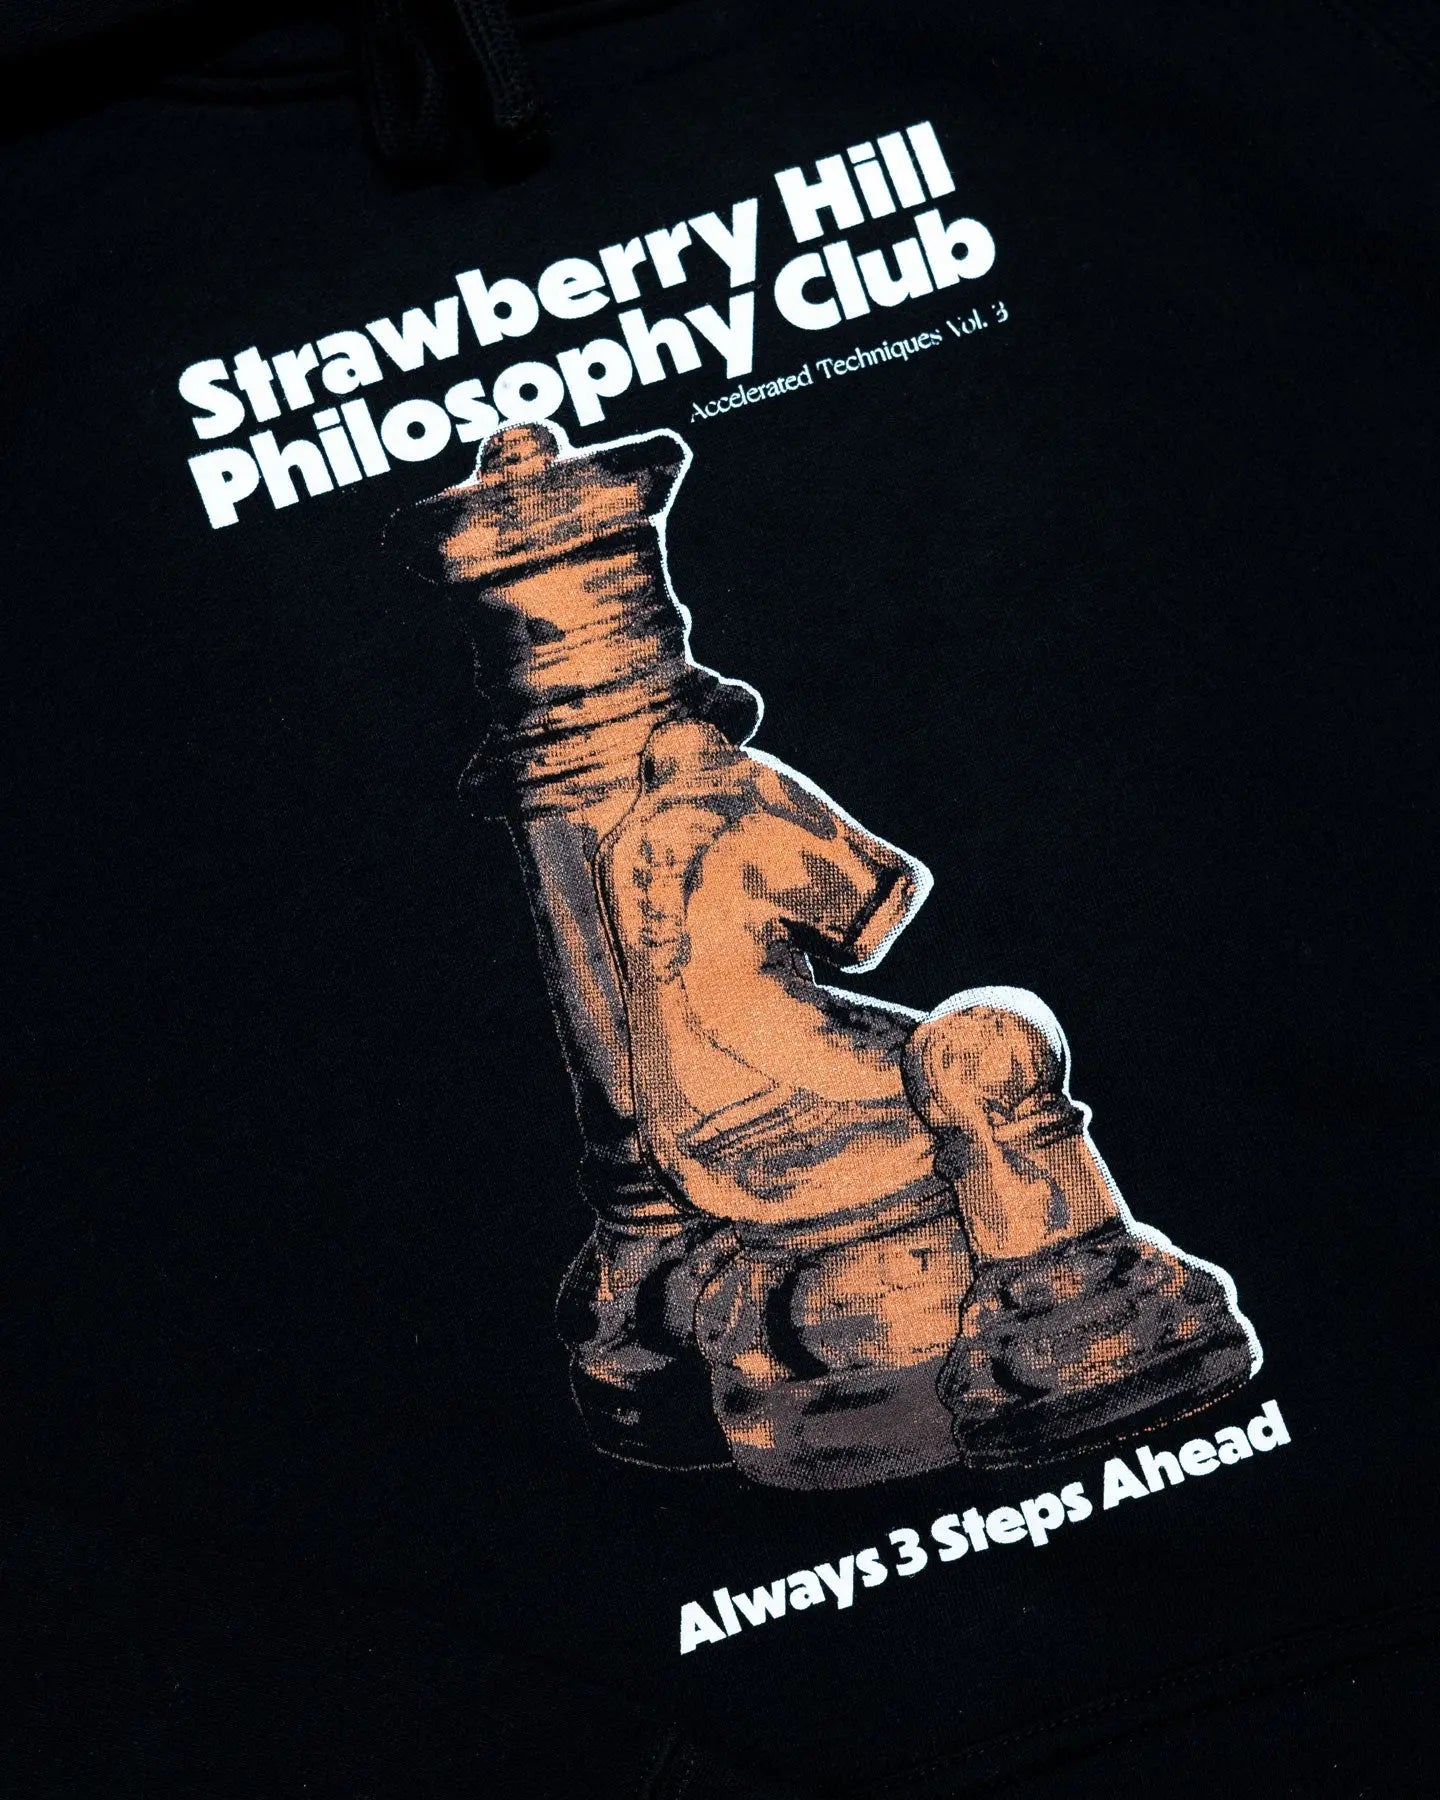 strawberry hill philosophy club 3 steps ahead hoodie black